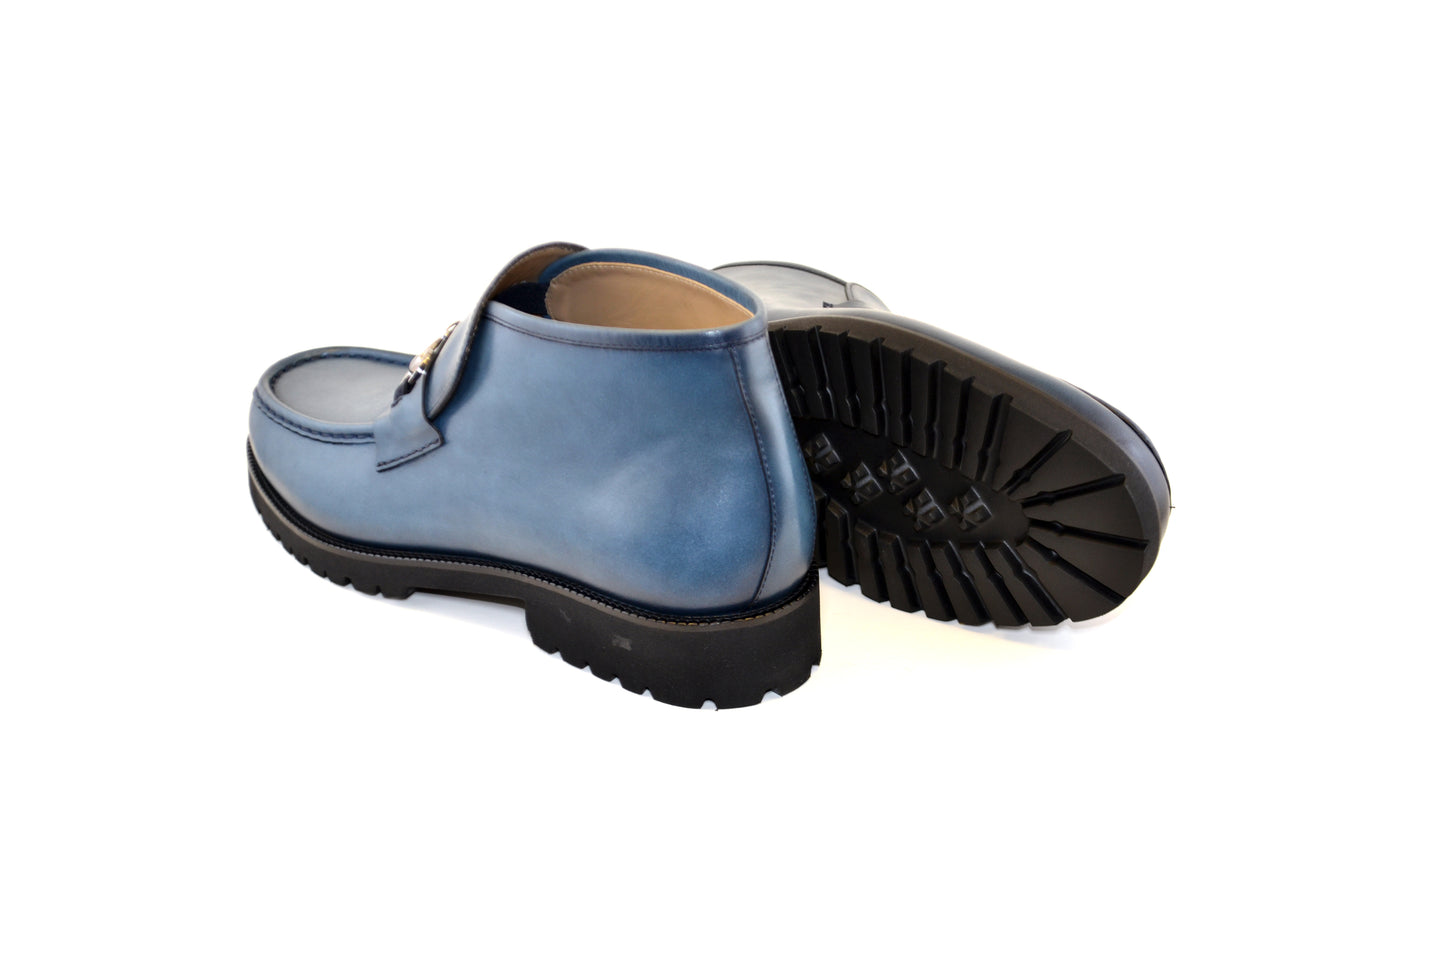 C031-5786 Bit Buckle Ankle boot-Ocean Blue